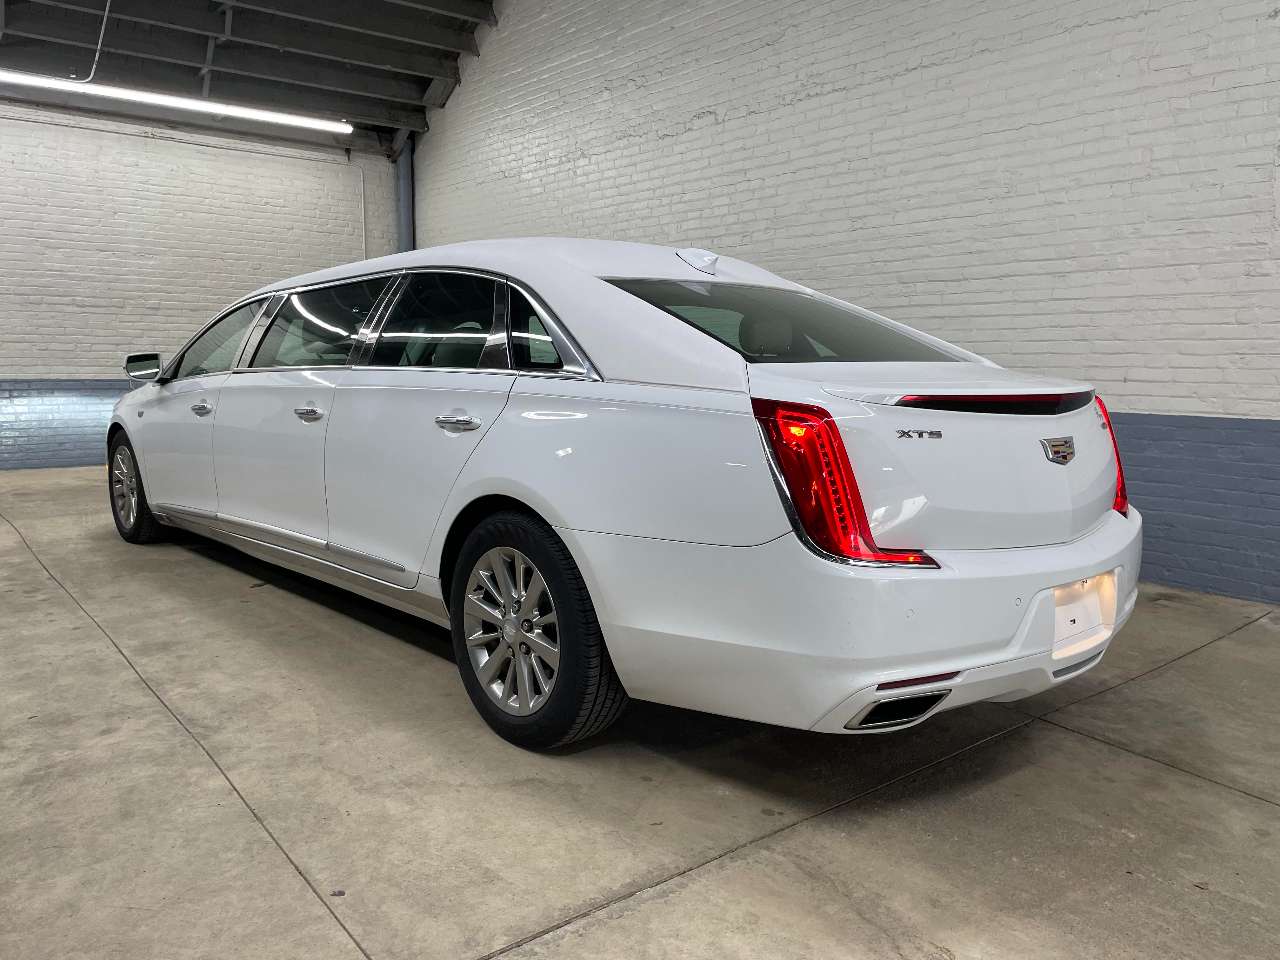 2019 Cadillac Eagle Kingsley Limousine 1695743845277